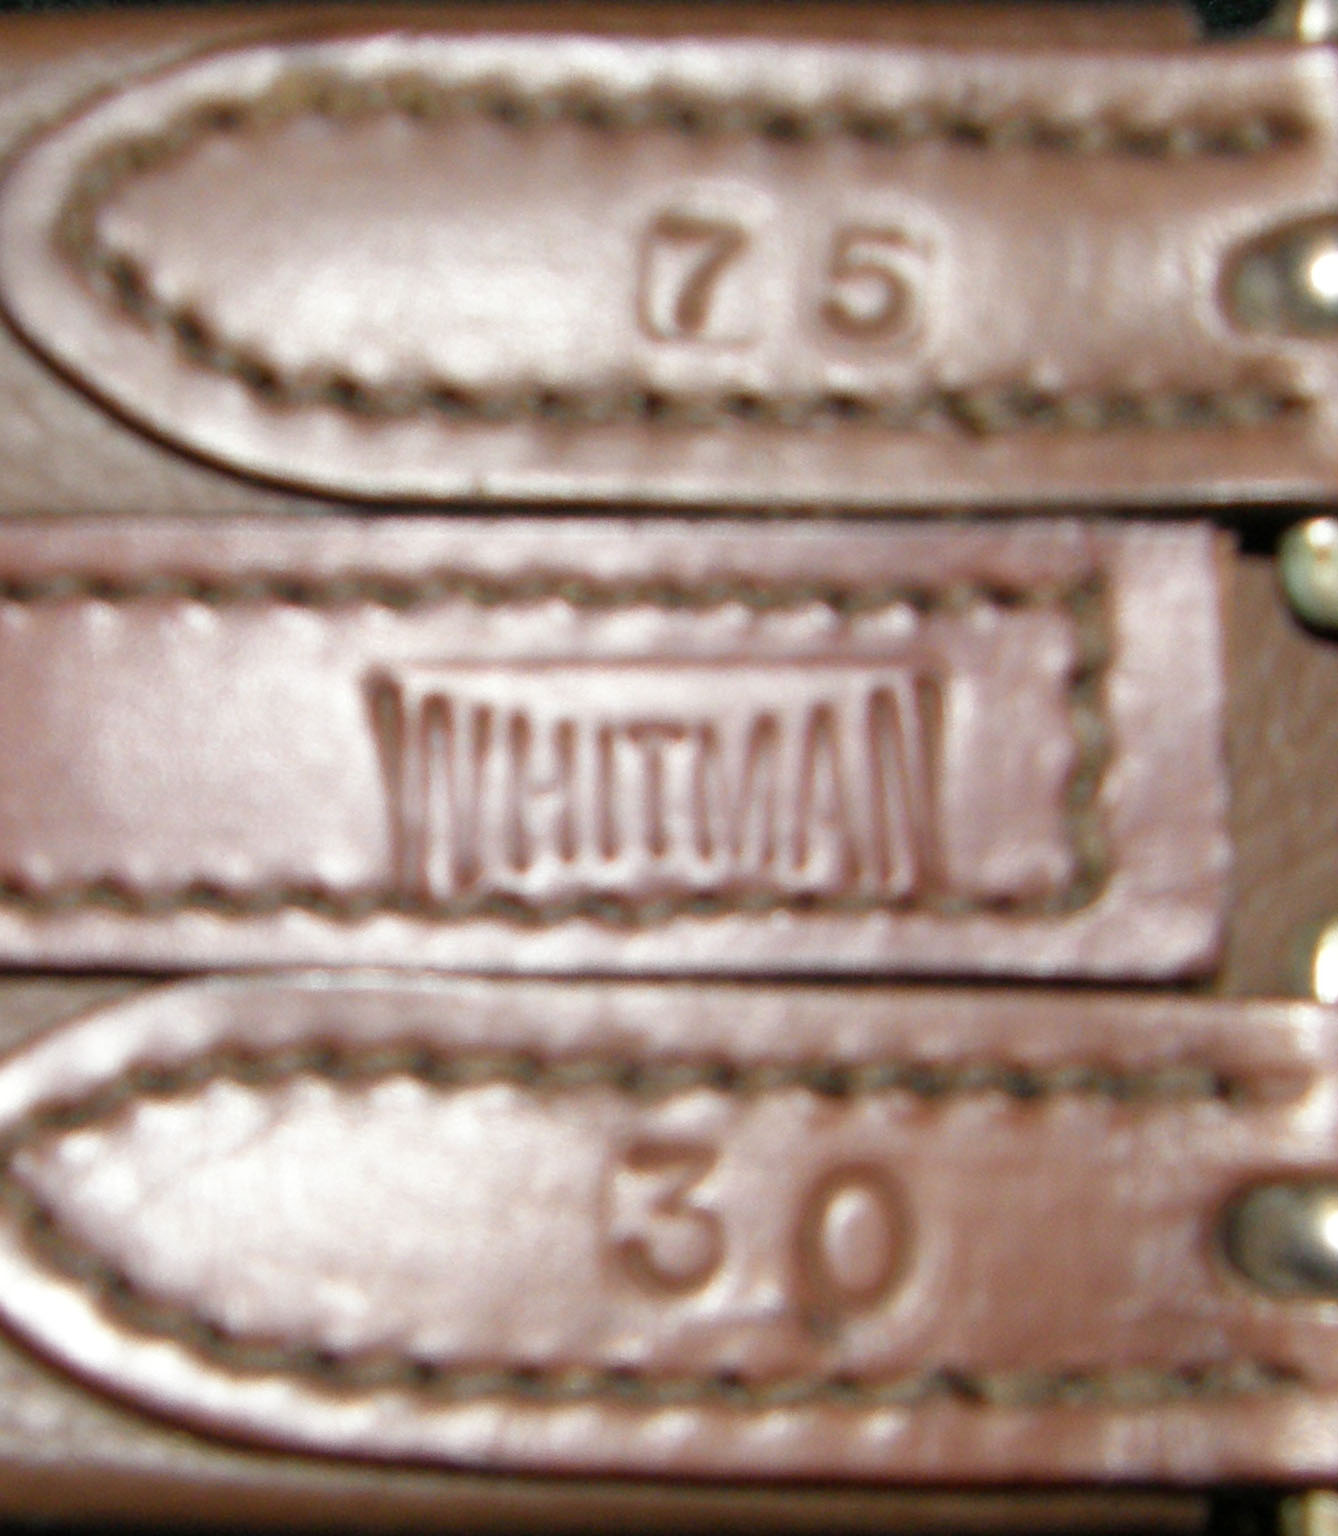 Whitman 32” Padded Leather Dressage Girth English Girth